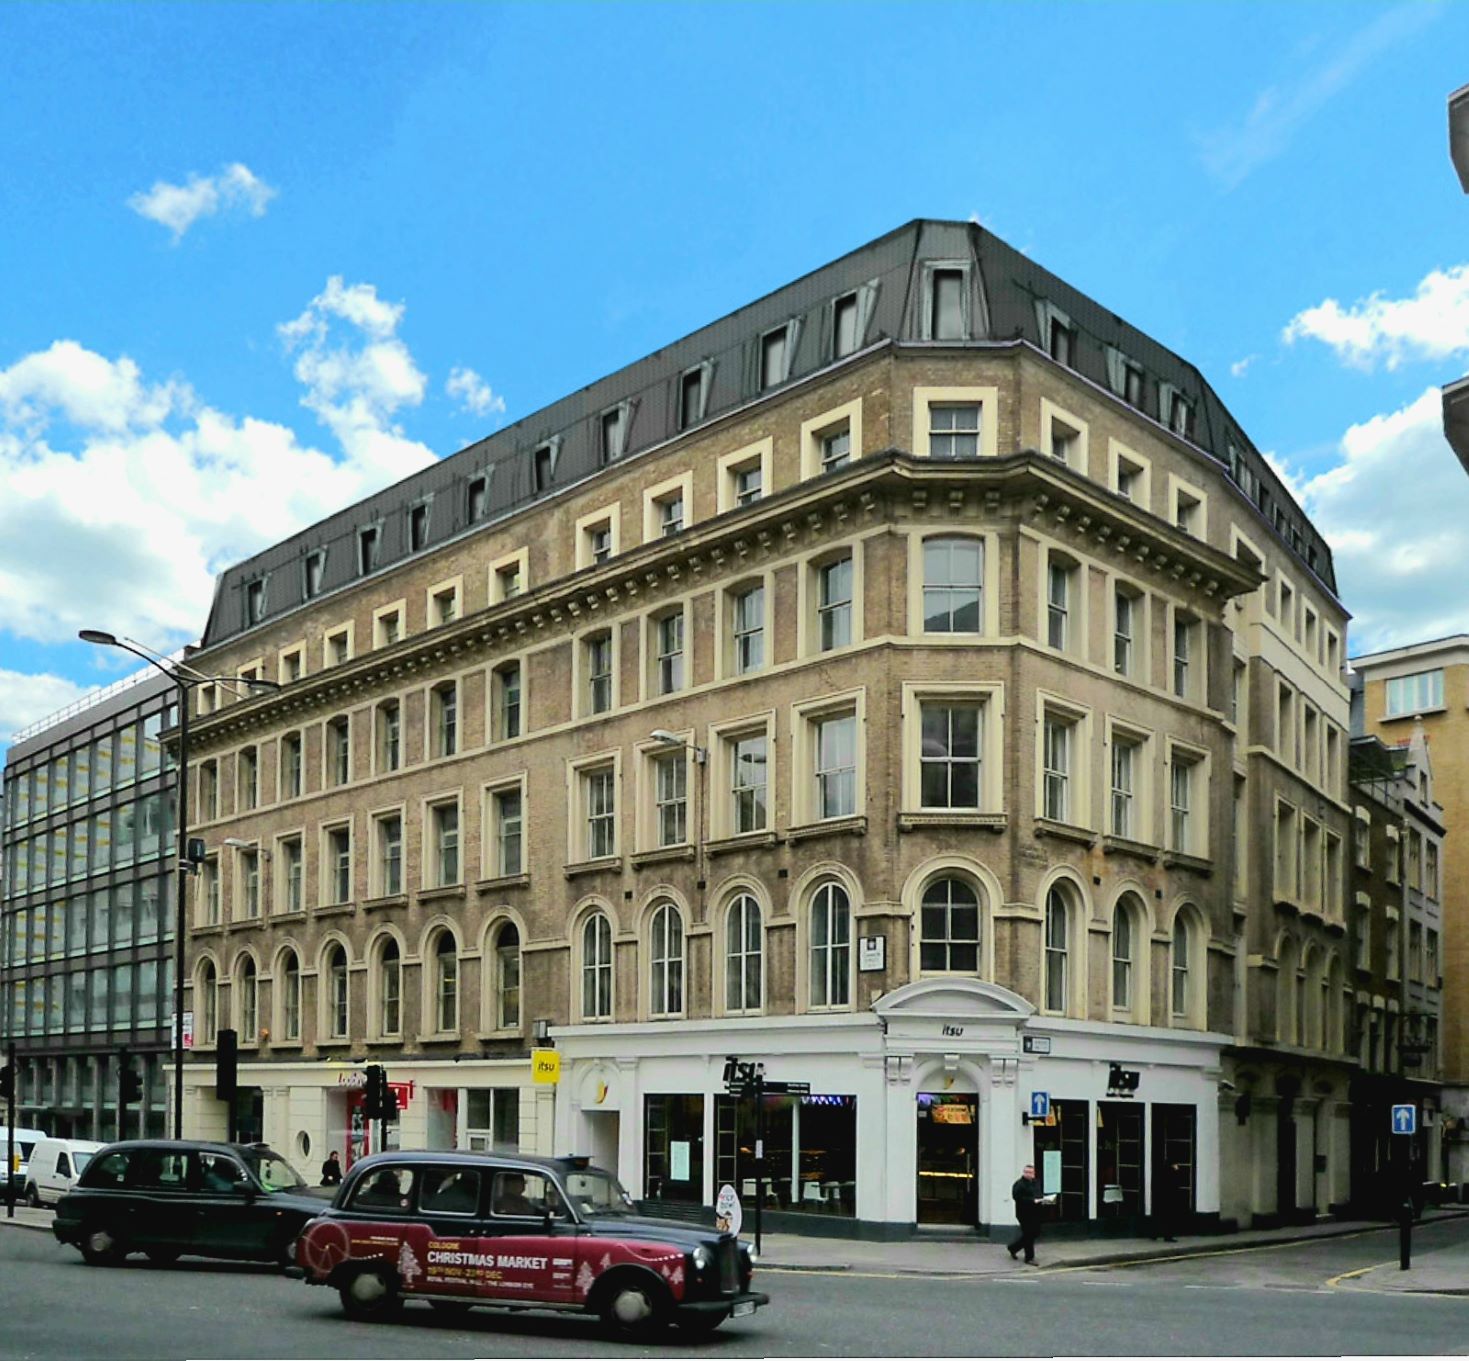 Cannon Street Apart-Hotel, City of London